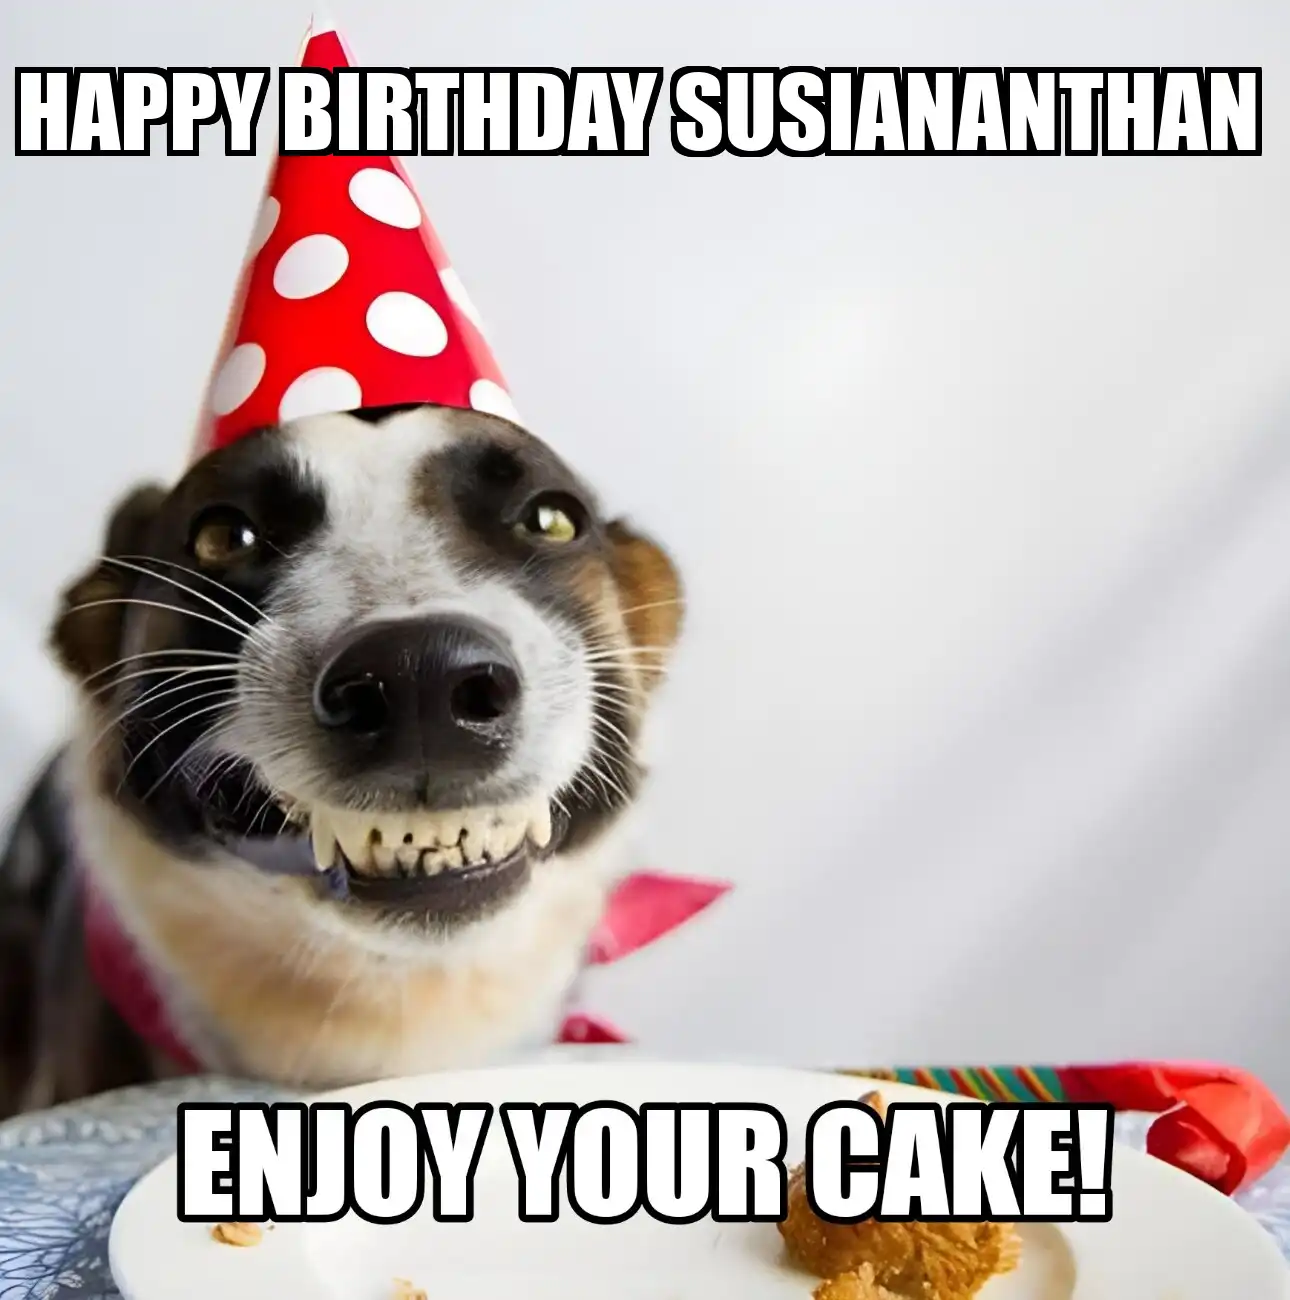 Happy Birthday Susiananthan Enjoy Your Cake Dog Meme